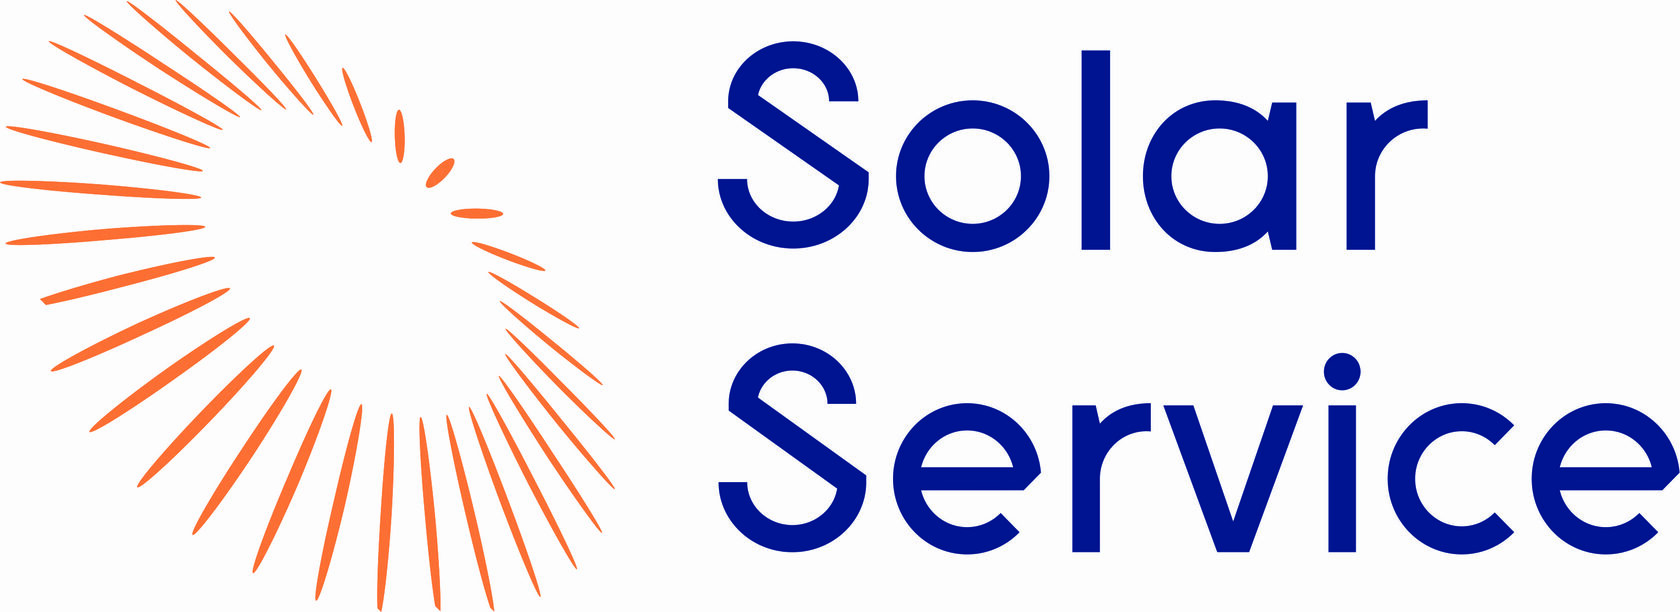 Gs1 russia. Эмблемы солнечных панелей. Solar servant. Solar service. Coifin лого.